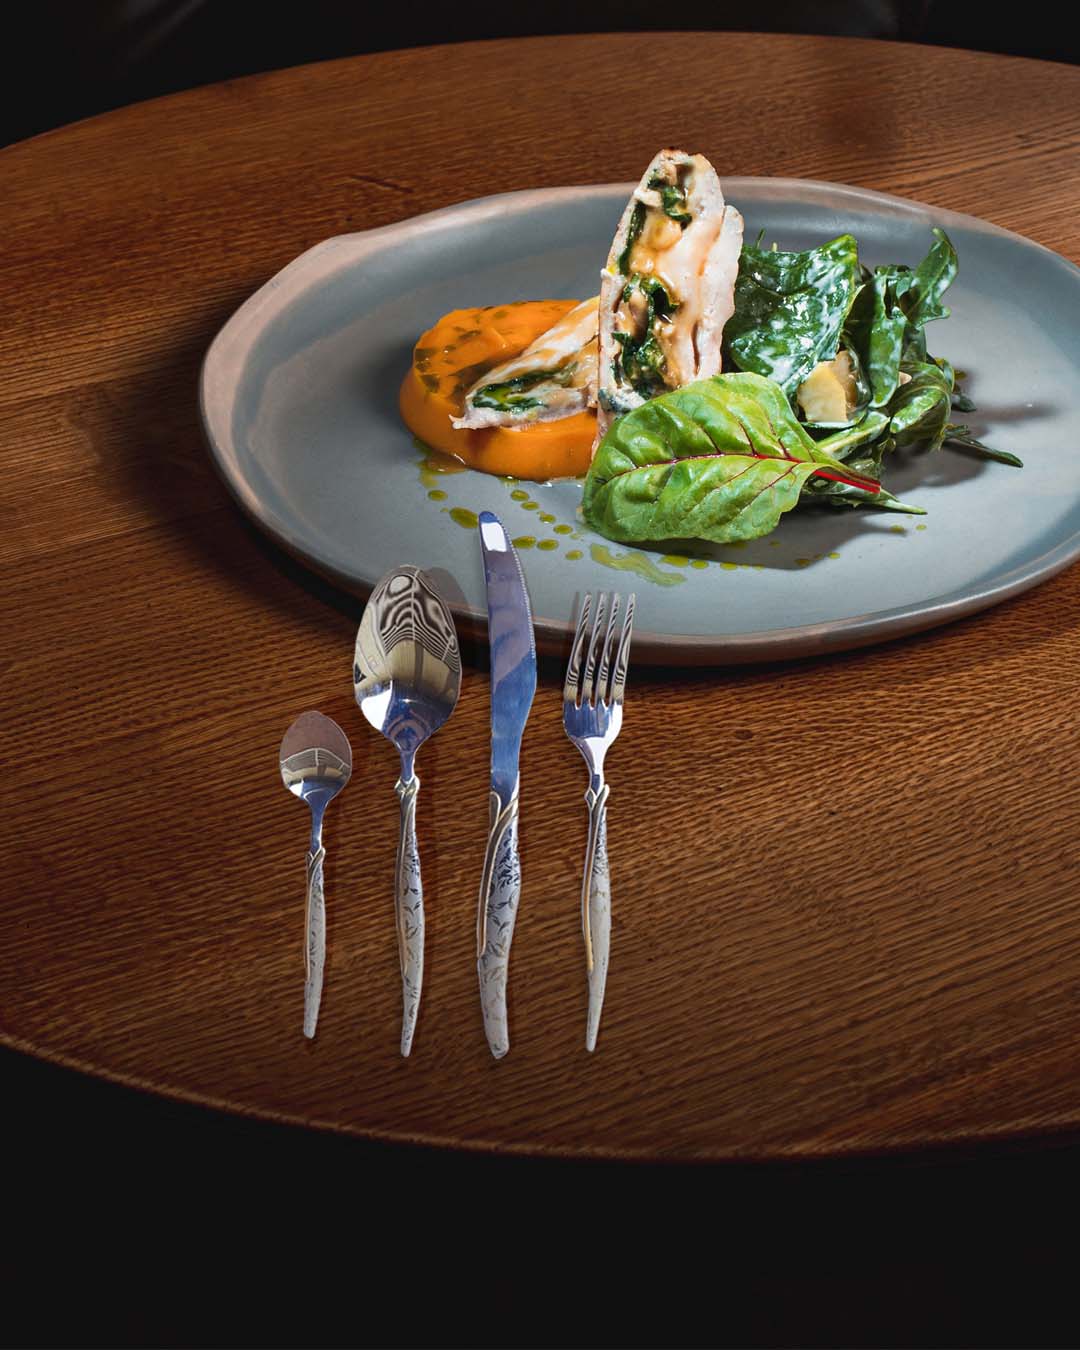 Dinner Spoons 6pack Cutlery Set Stainless Steel BPS-004D